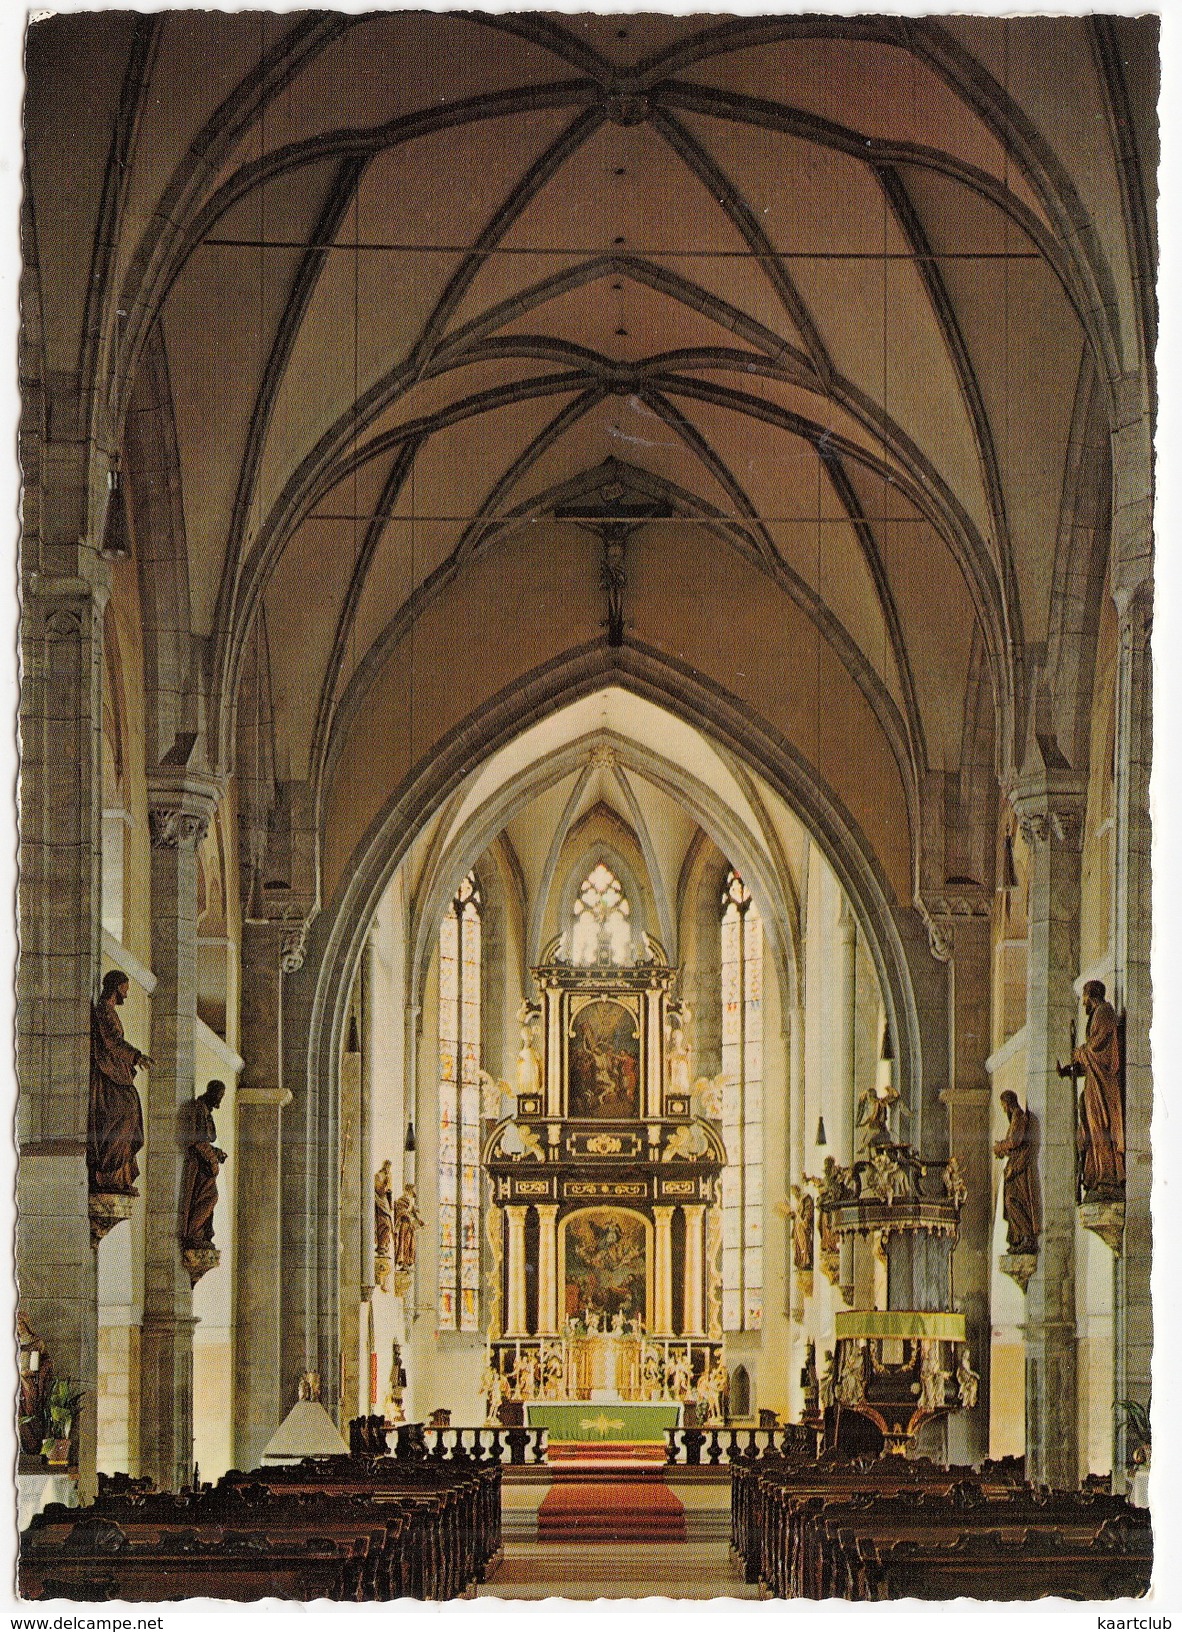 Friesach - Stadtpfarrkirche, Gotischer Chor 14. Jahrhundert - Romanische Basilika - Friesach